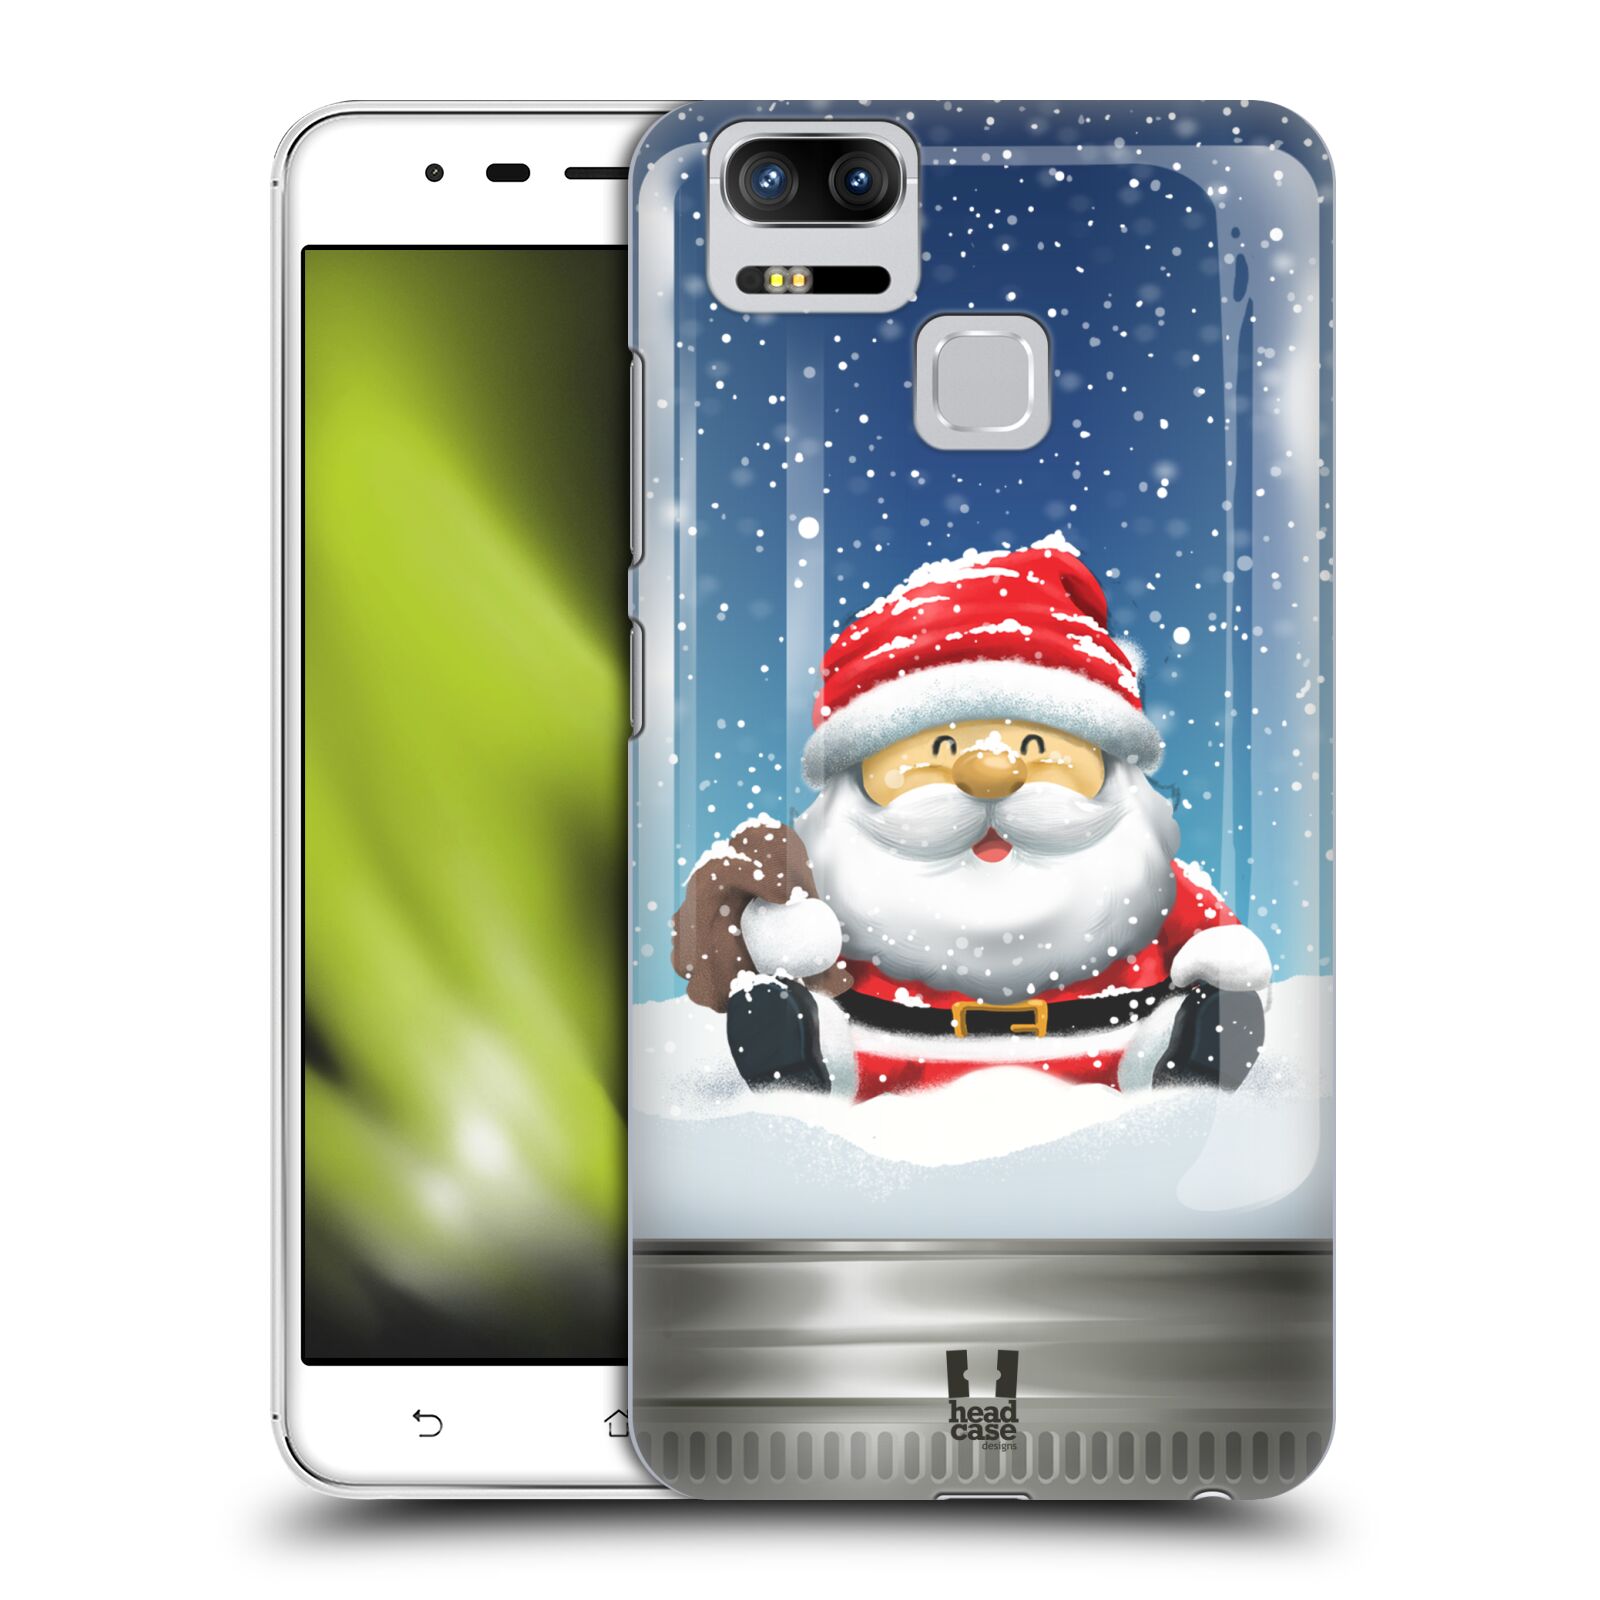 HEAD CASE plastový obal na mobil Asus Zenfone 3 Zoom ZE553KL vzor Vánoce v těžítku SANTA